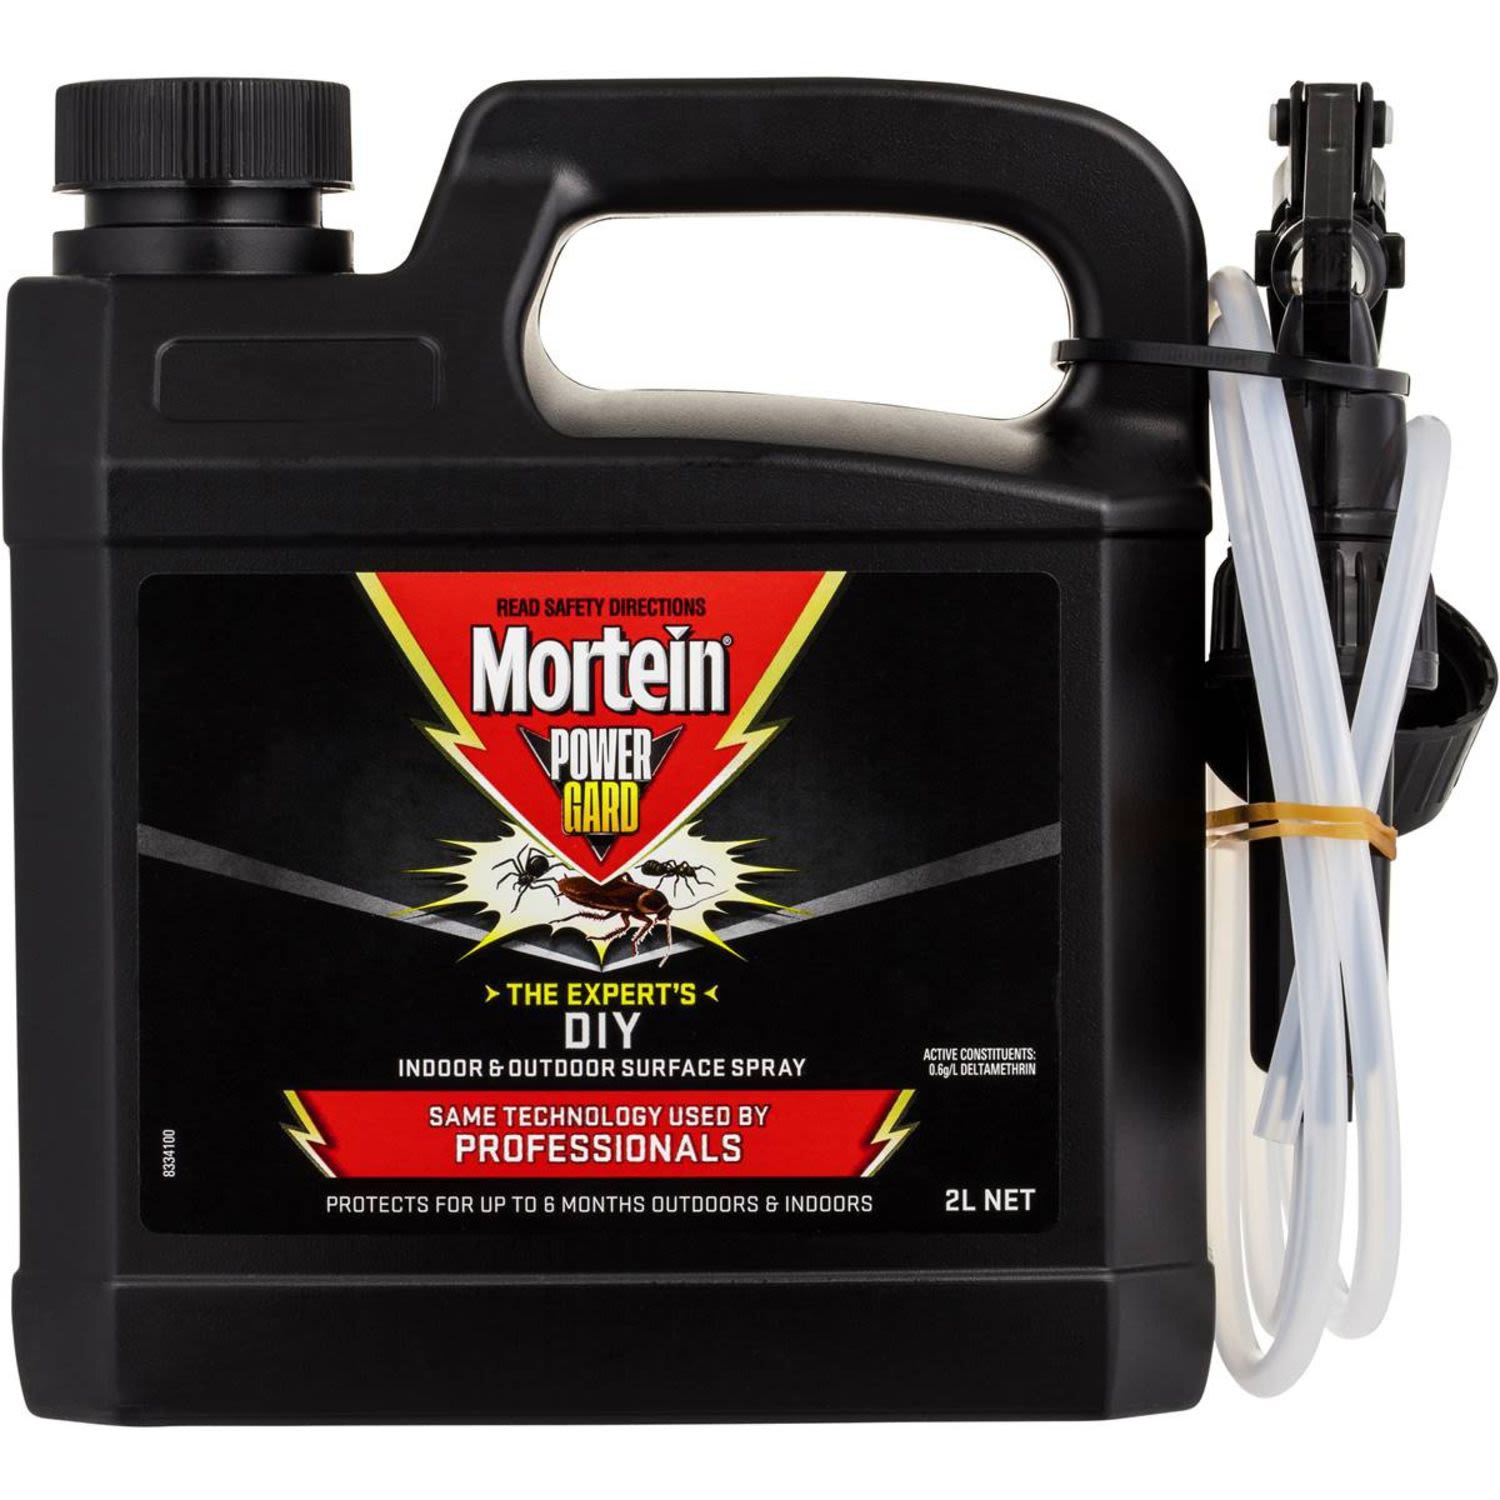 Mortein Surface Spray Professional Diy Kit, 2 Litre